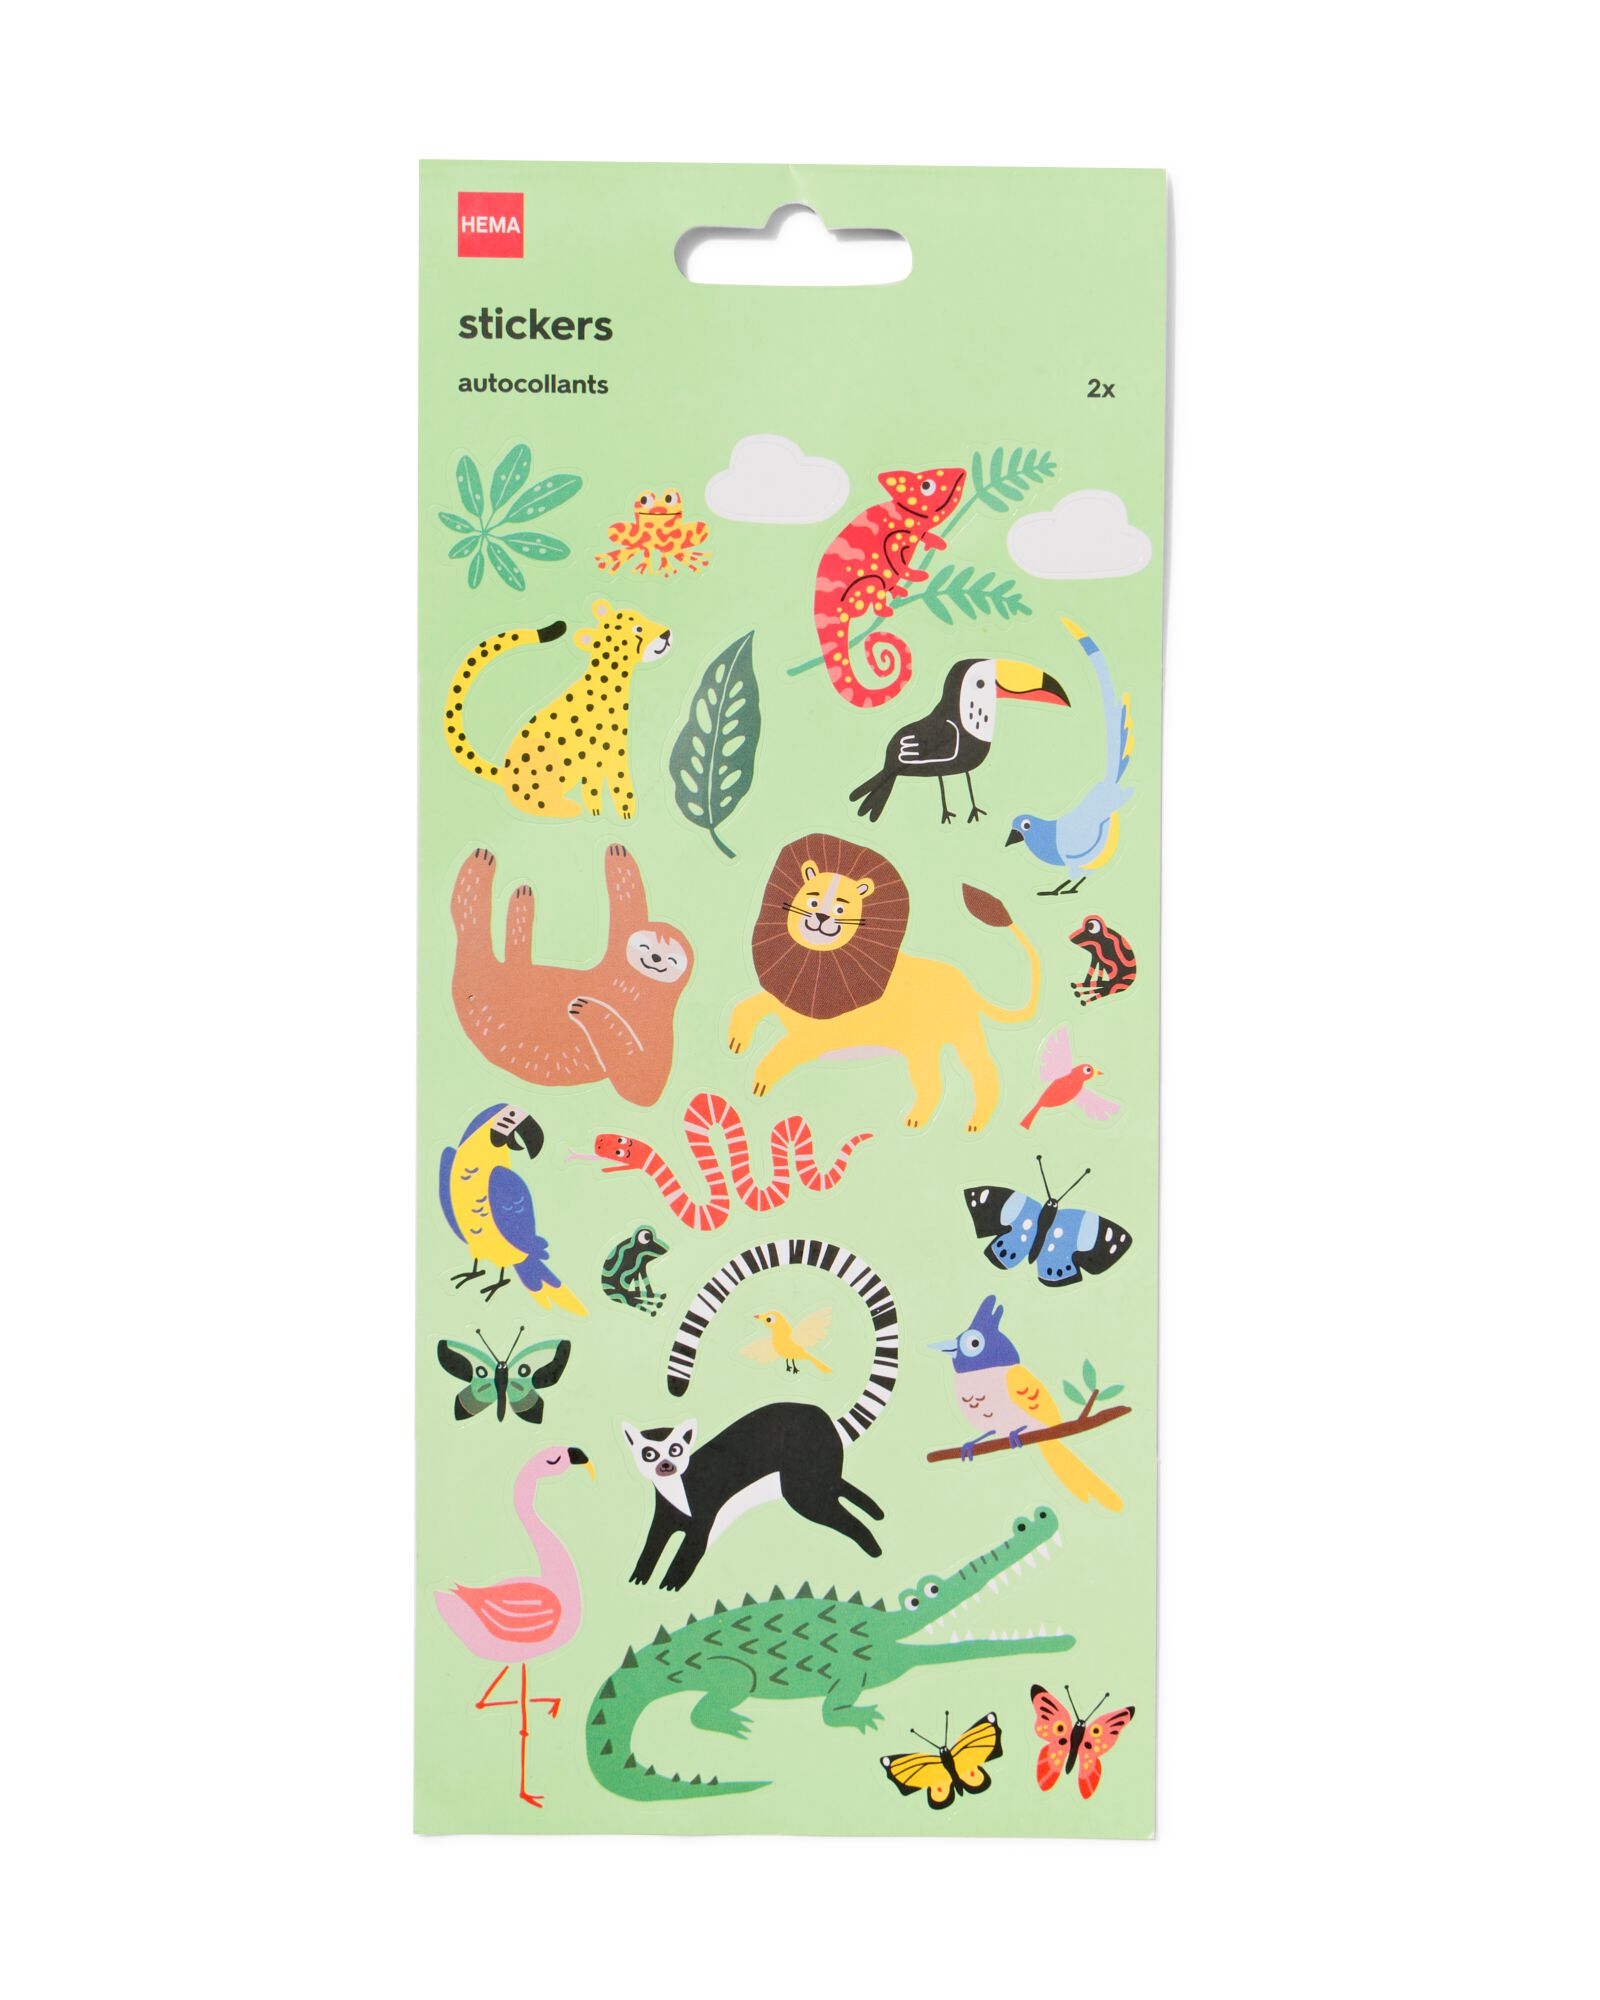 Sticker Mural Personalisé Animaux sauvages et feuilles - TenStickers